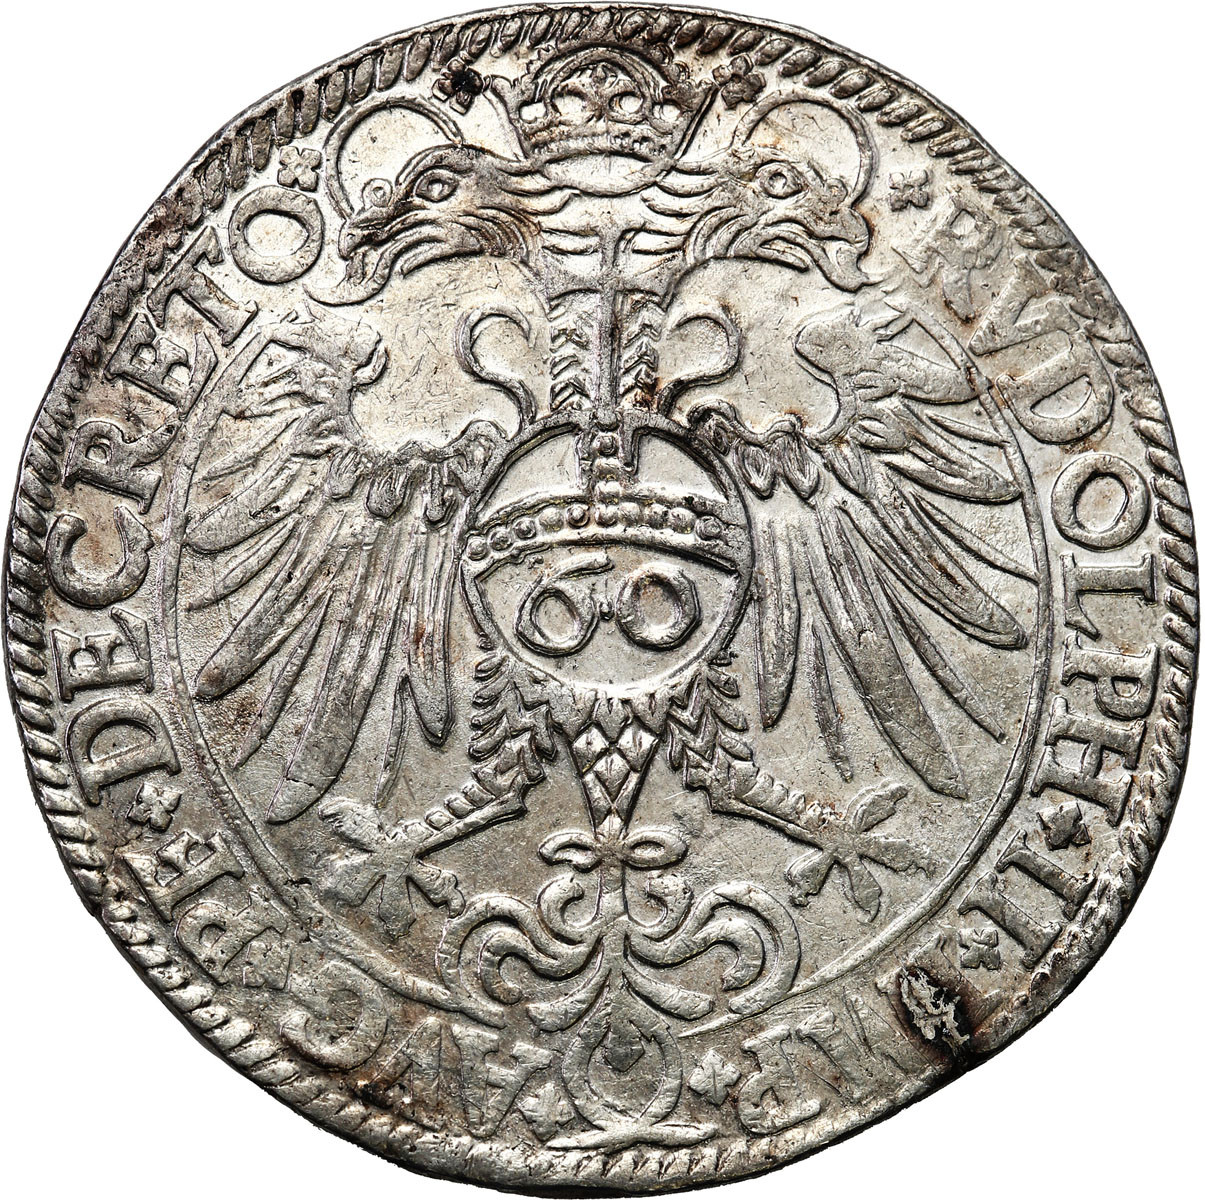 Niemcy. Nürnberg. Guldentaler (60 krajcarów) 1578